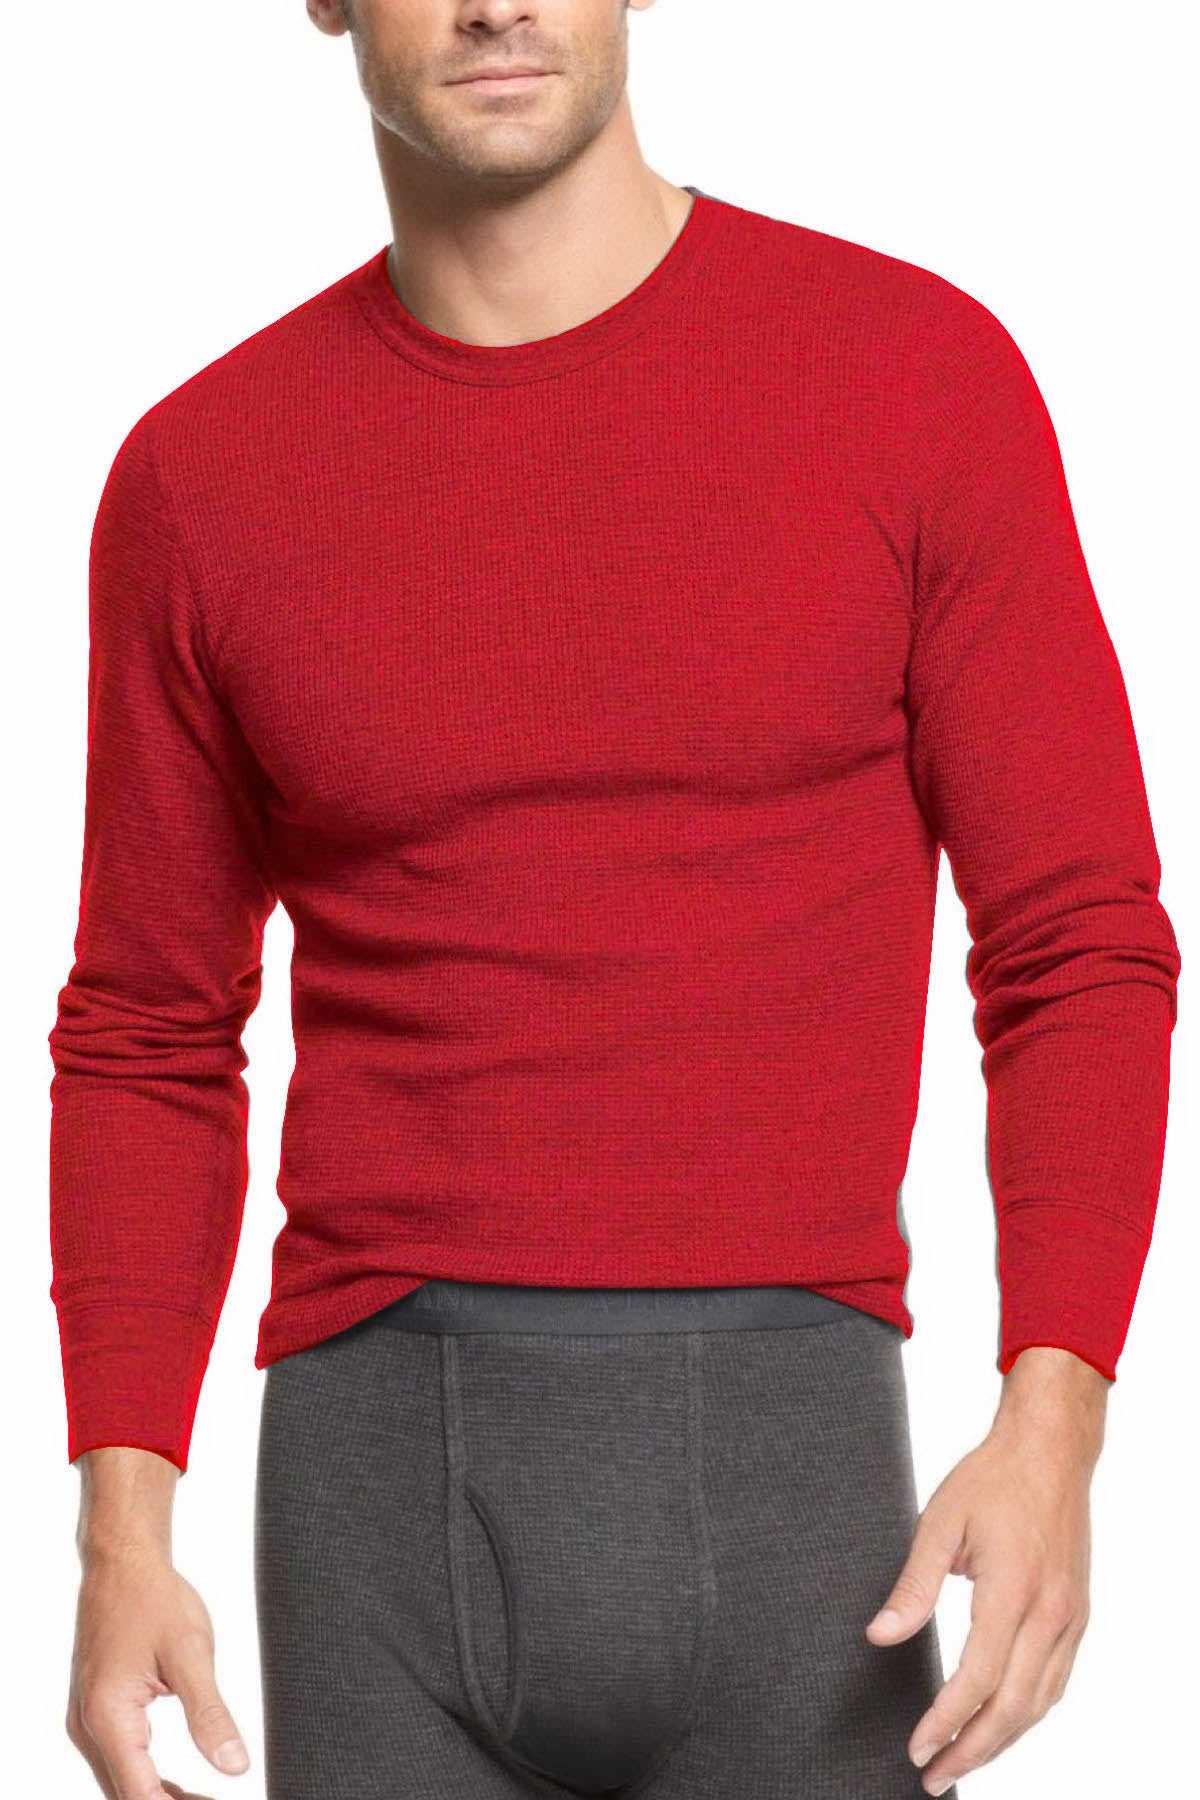 Alfani Red Thermal Knit Waffle Crew-Neck Shirt